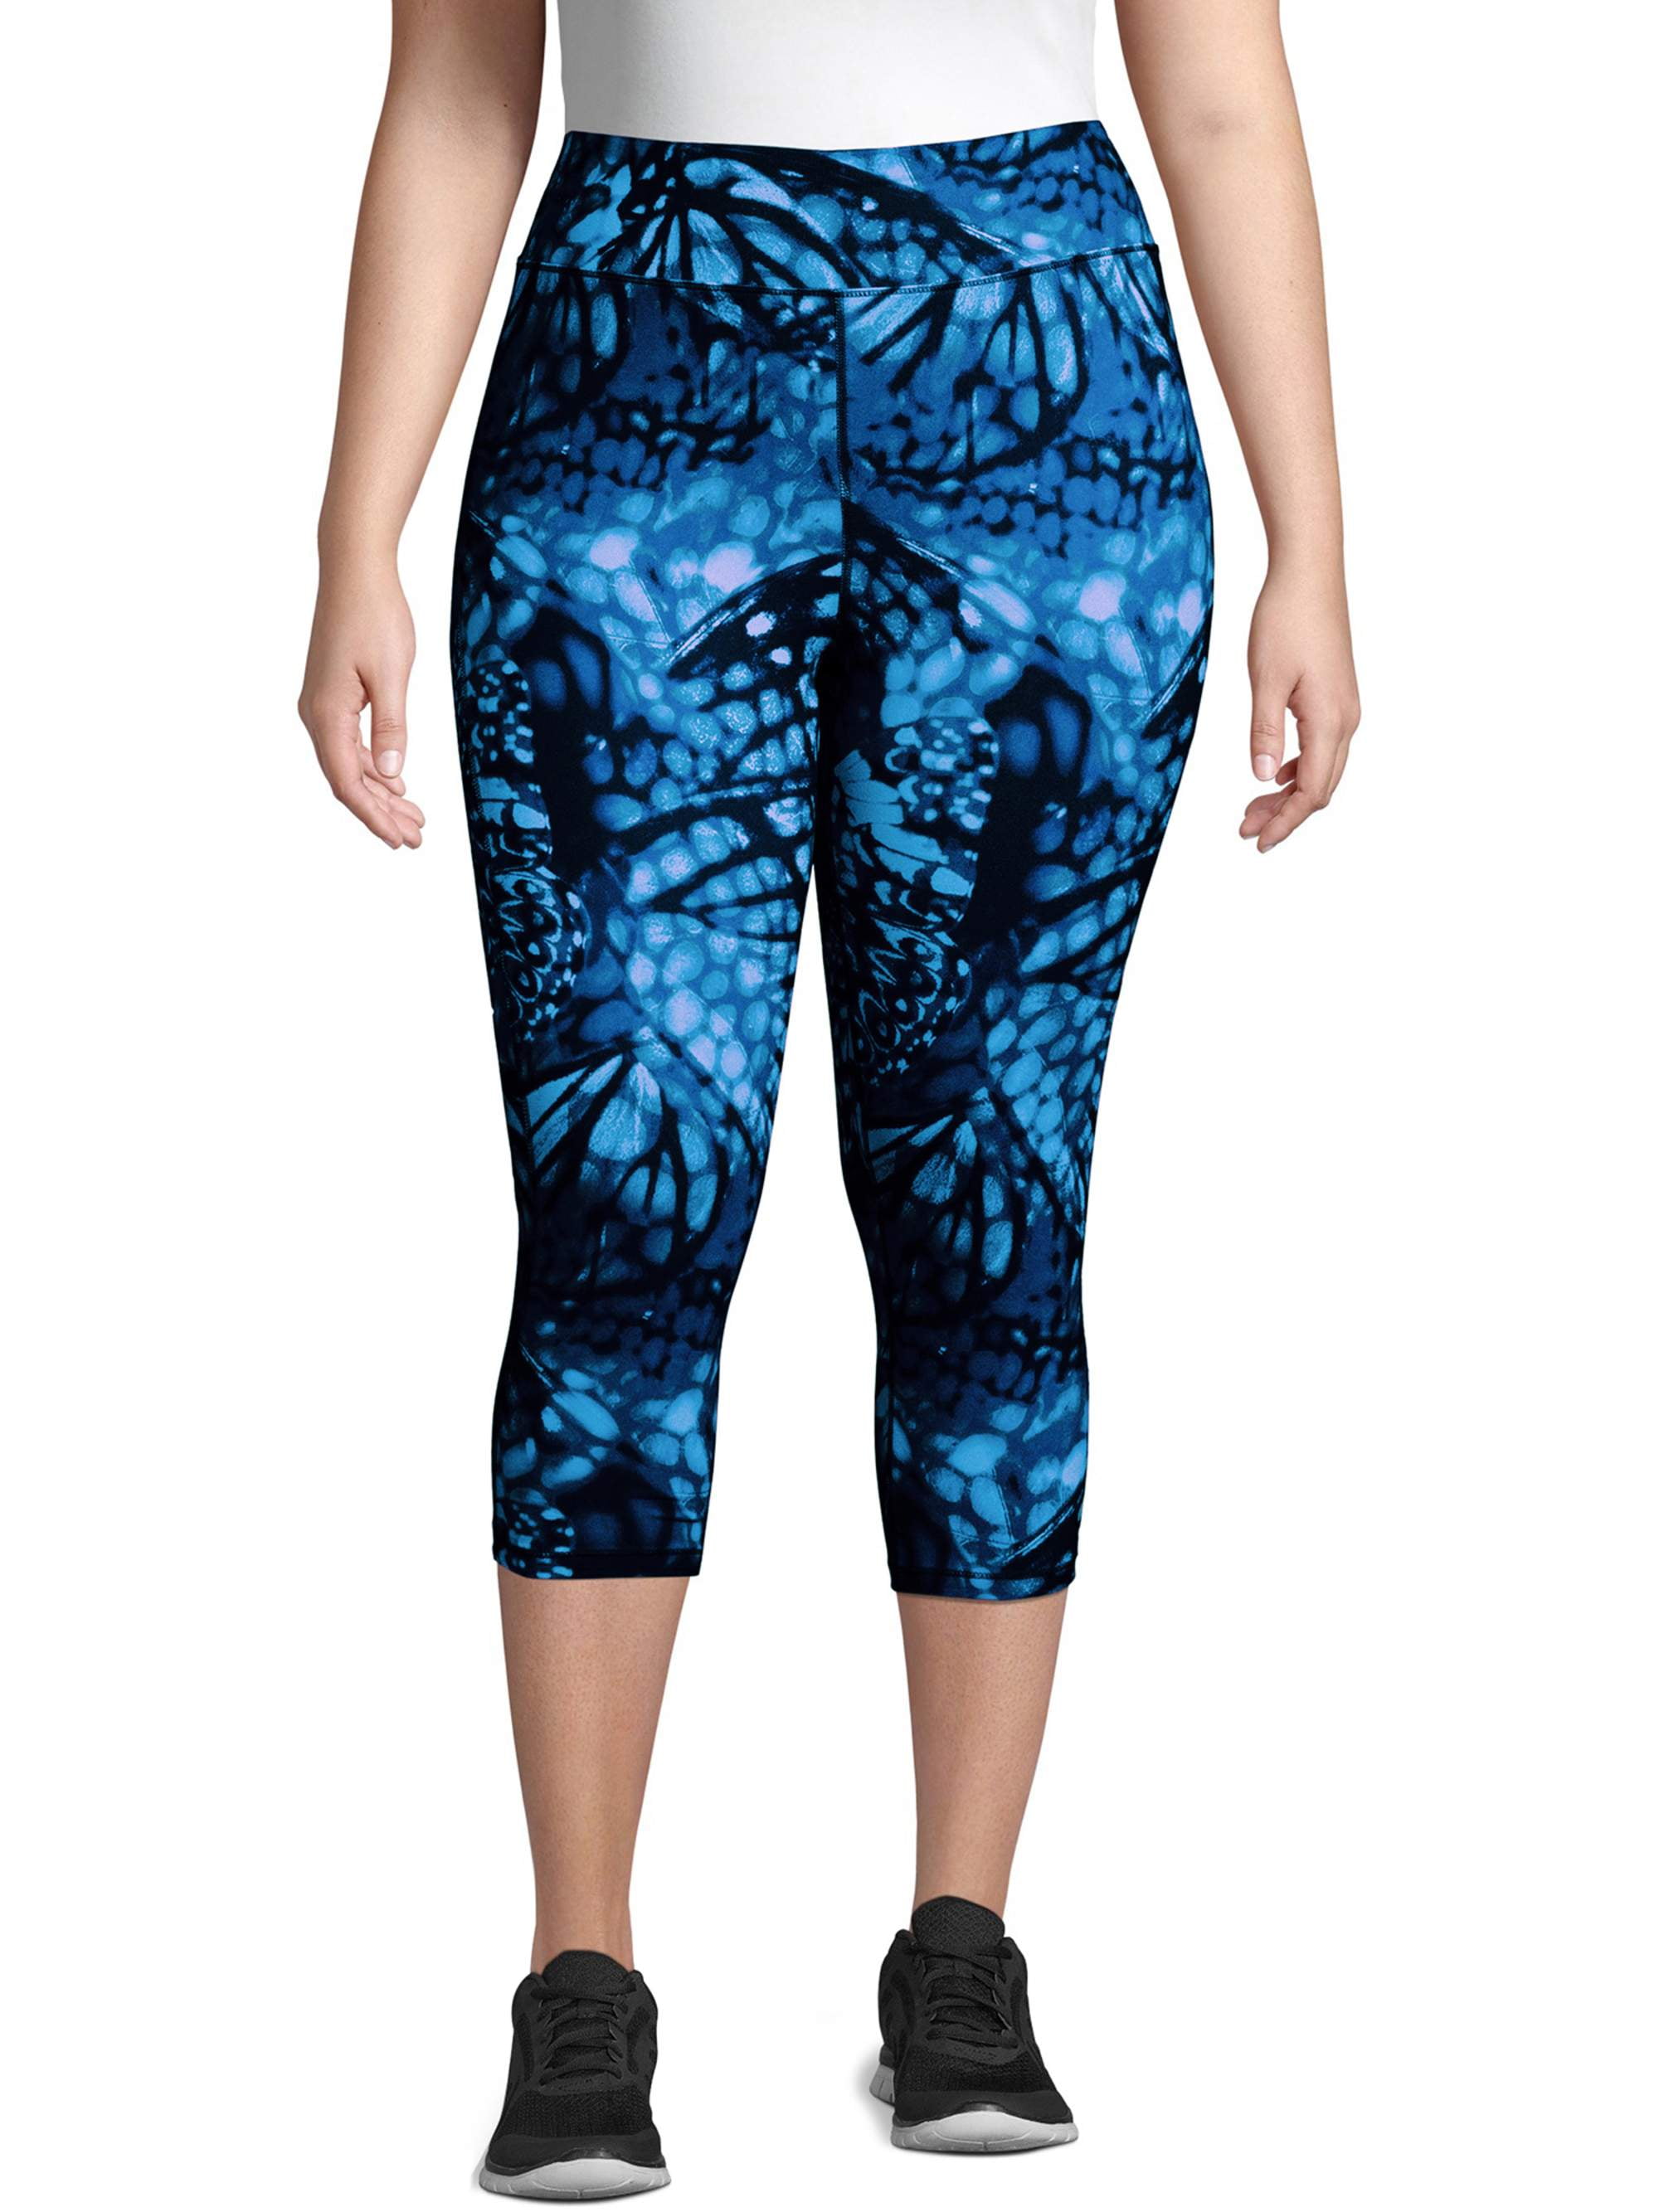 MOREFEEL Plus Size Leggings for Women-Stretchy X-Large-4X Tummy Control  High Waist Spandex Workout Black Yoga Pants